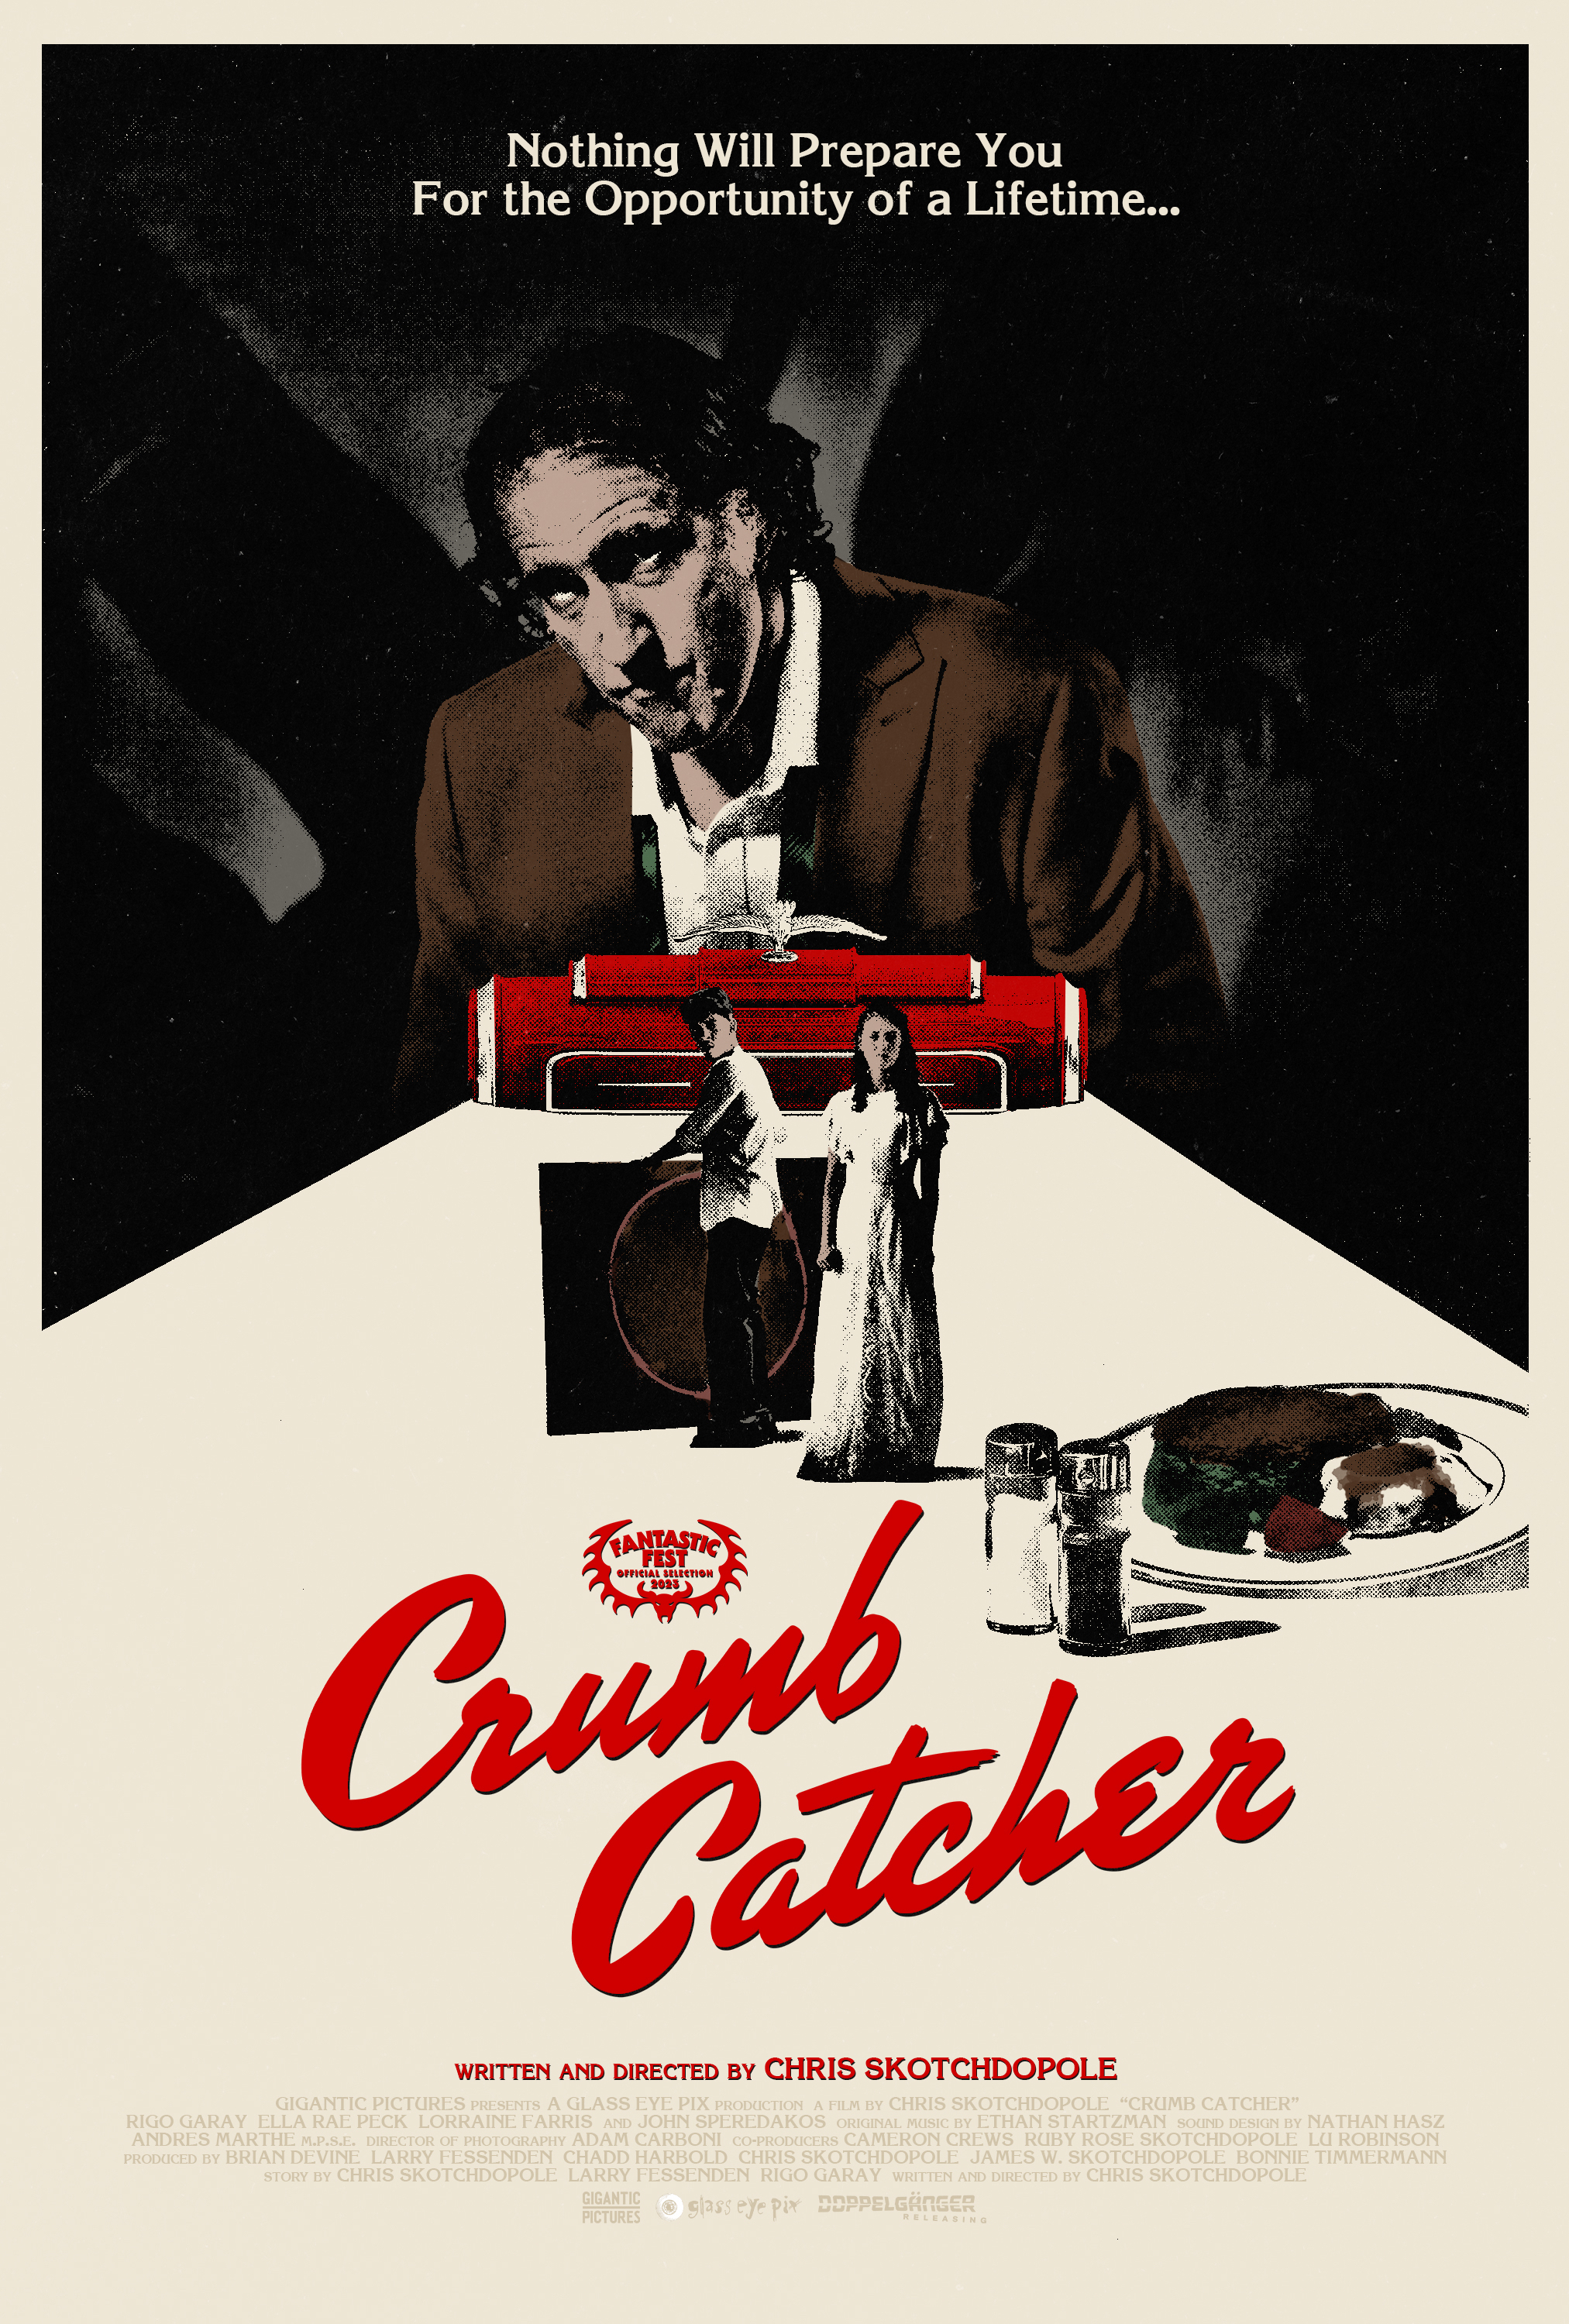 Crumb Catcher poster